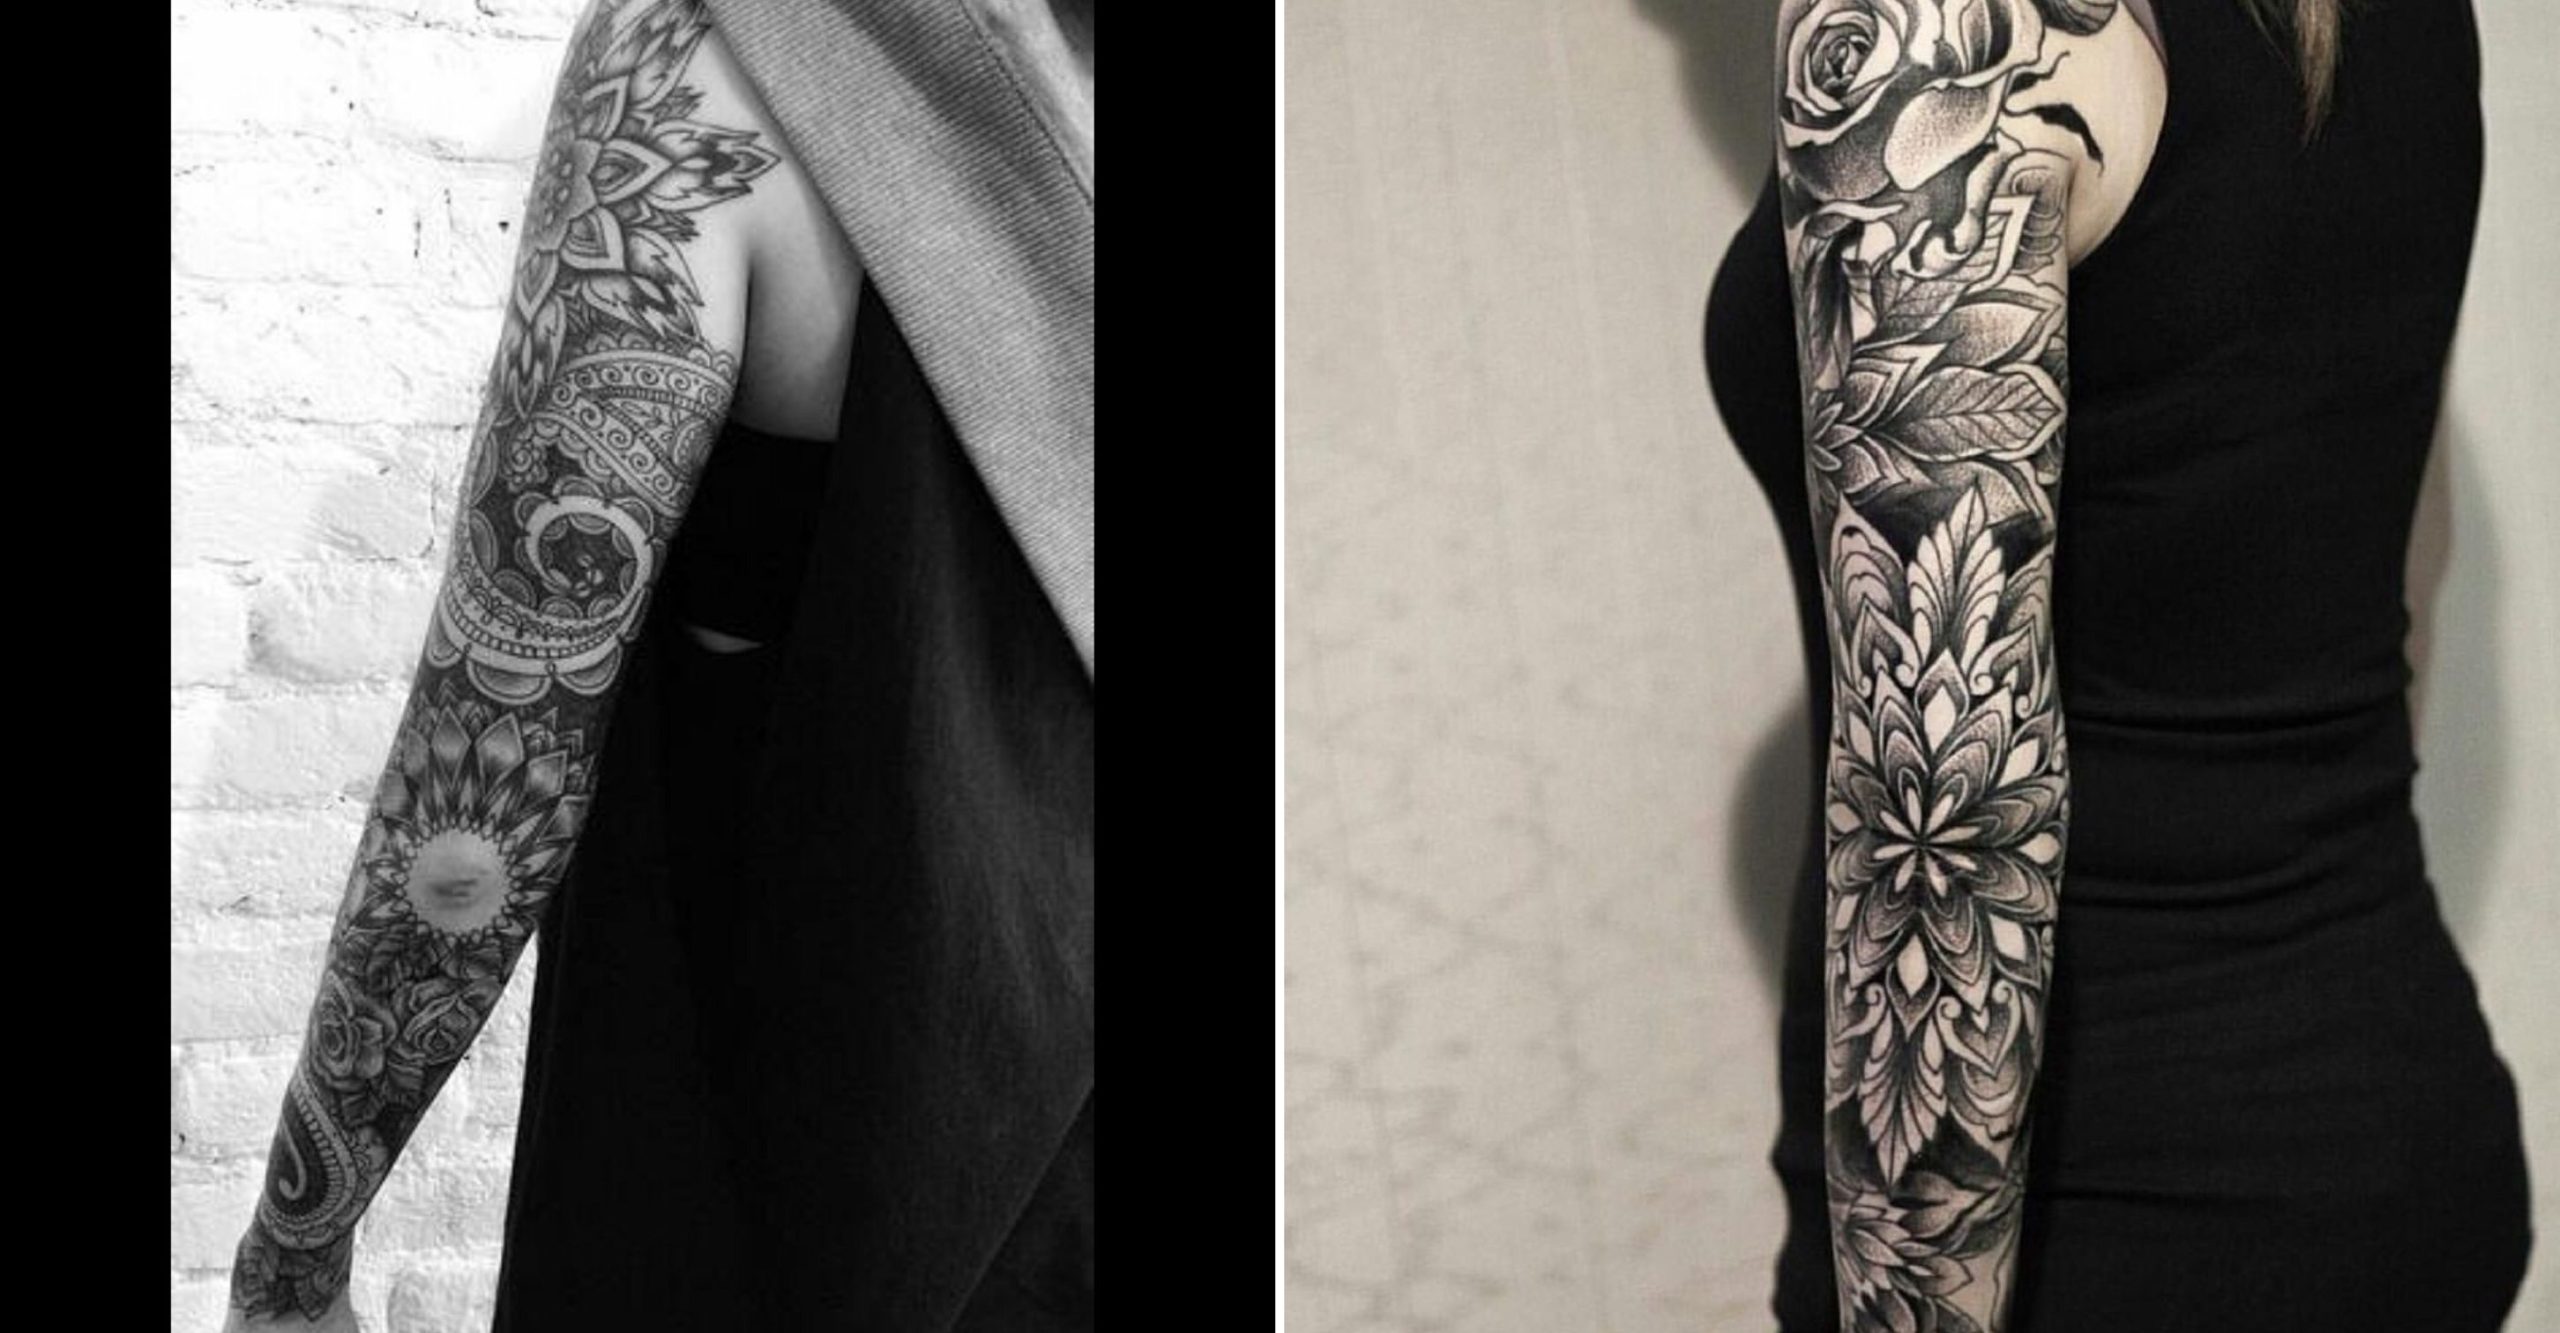 Tattoo Nation Dubai - Dubai Tattoo Artists - Dubai Tattoo Studio  (tattoonationdxb) - Profile | Pinterest